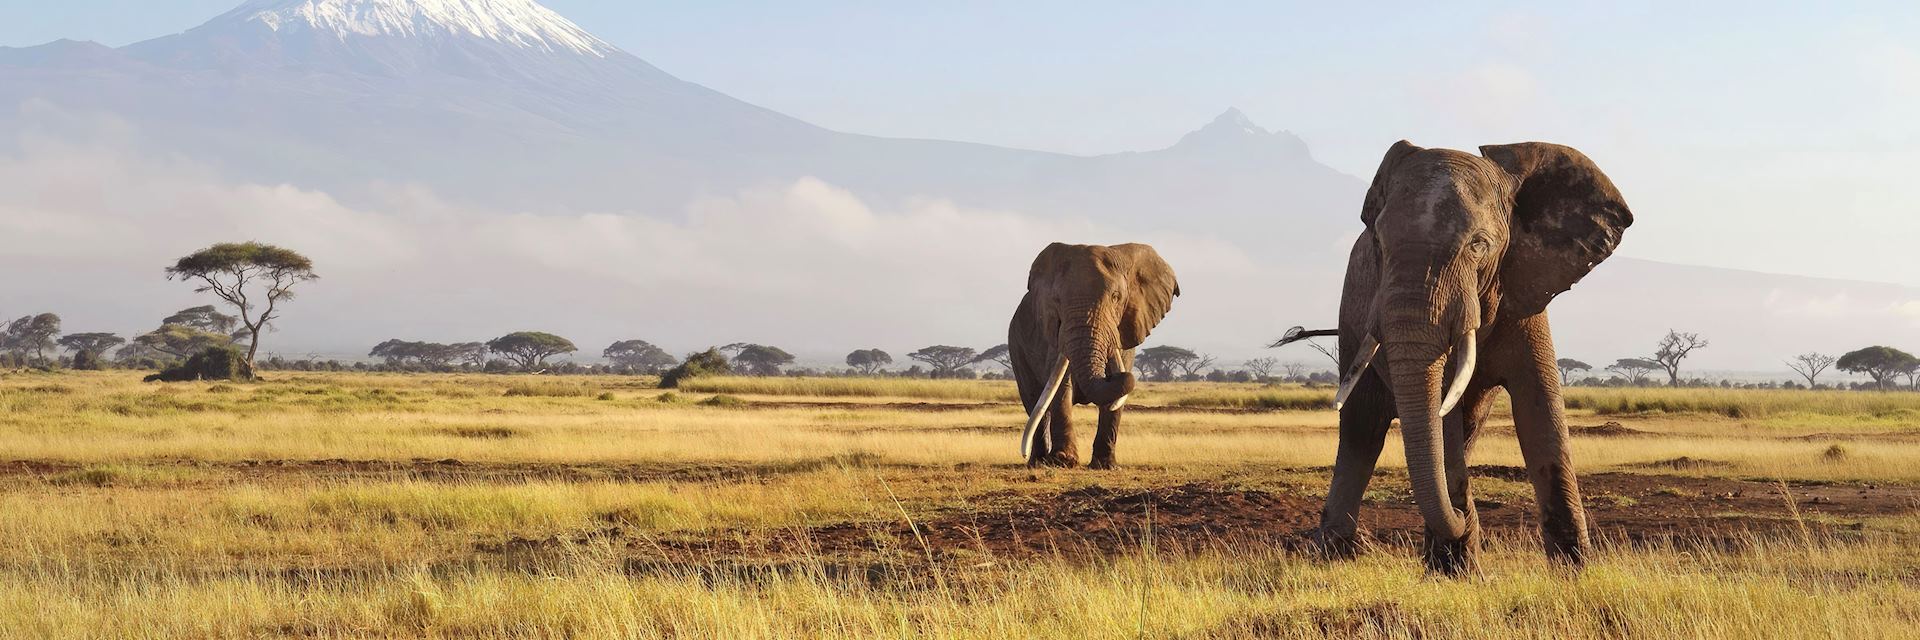 Elephant in the African savanna